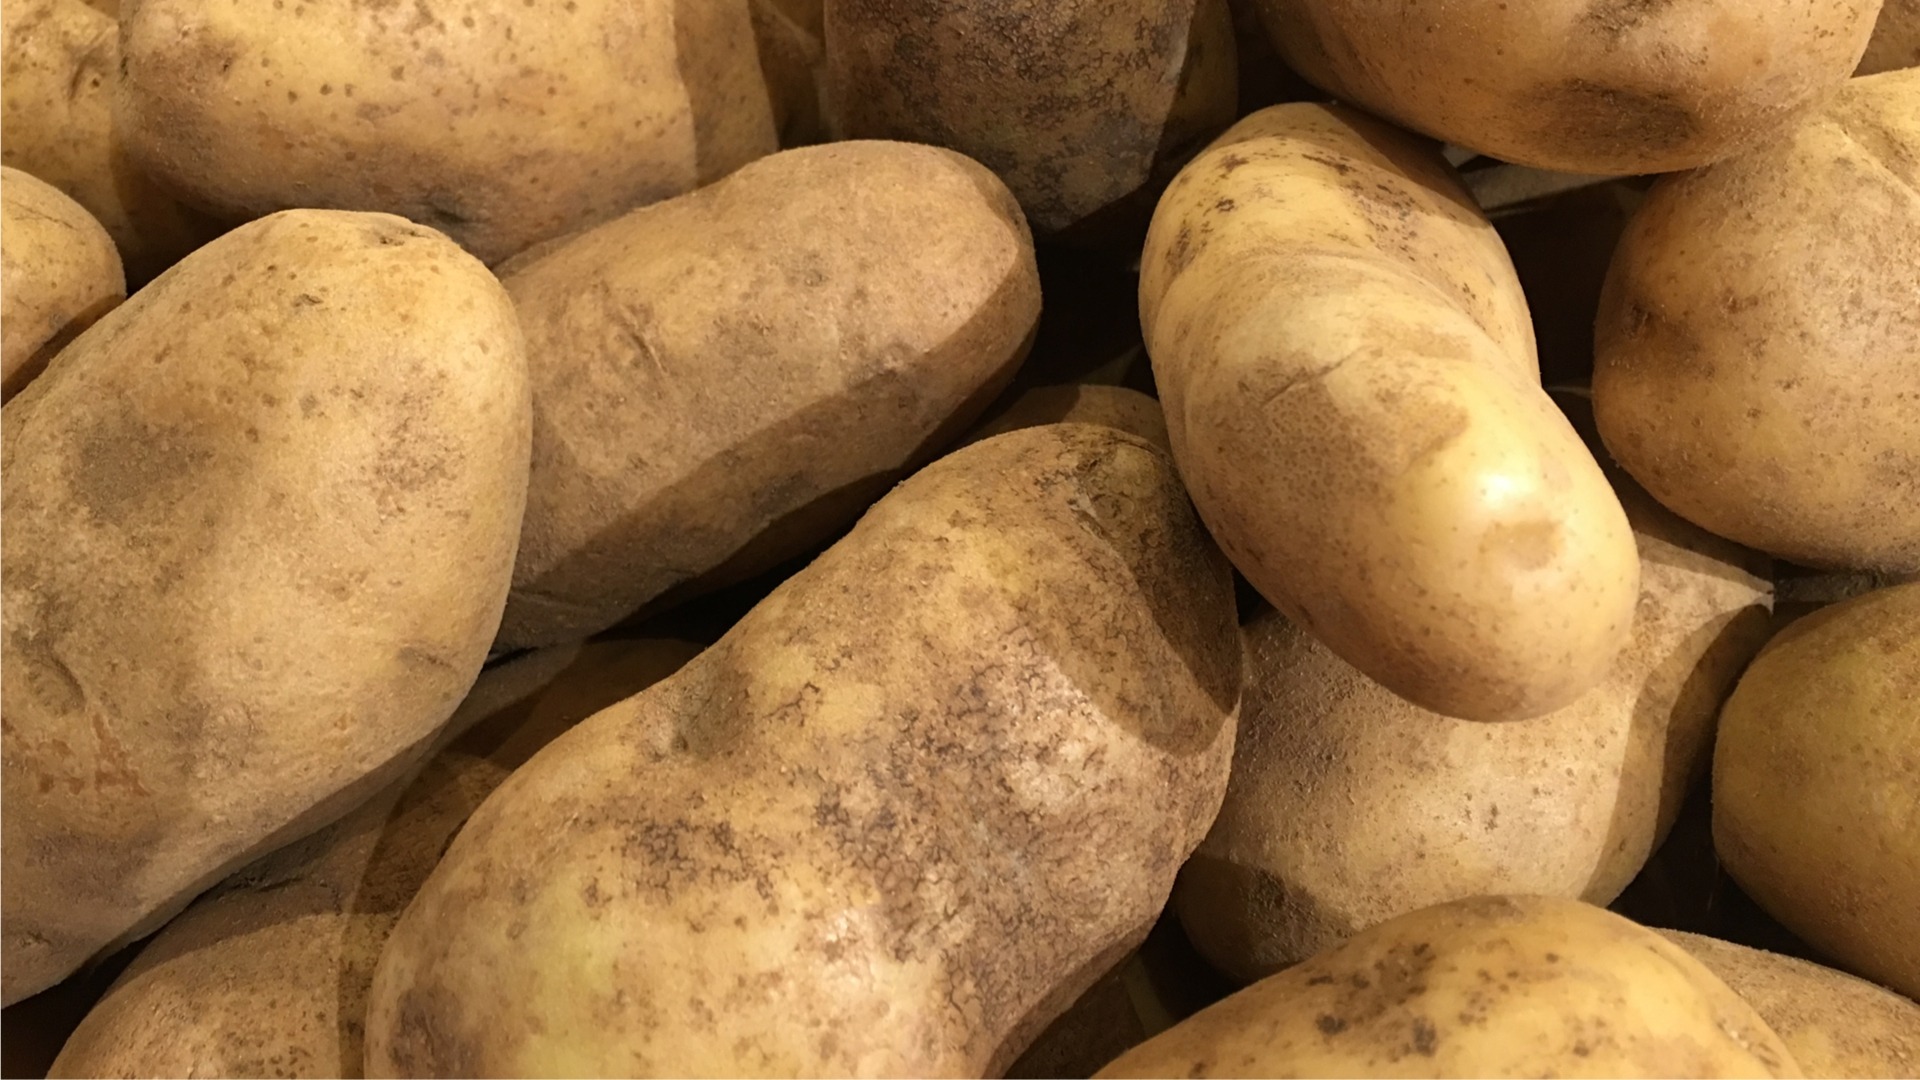 Yukon Gold potato